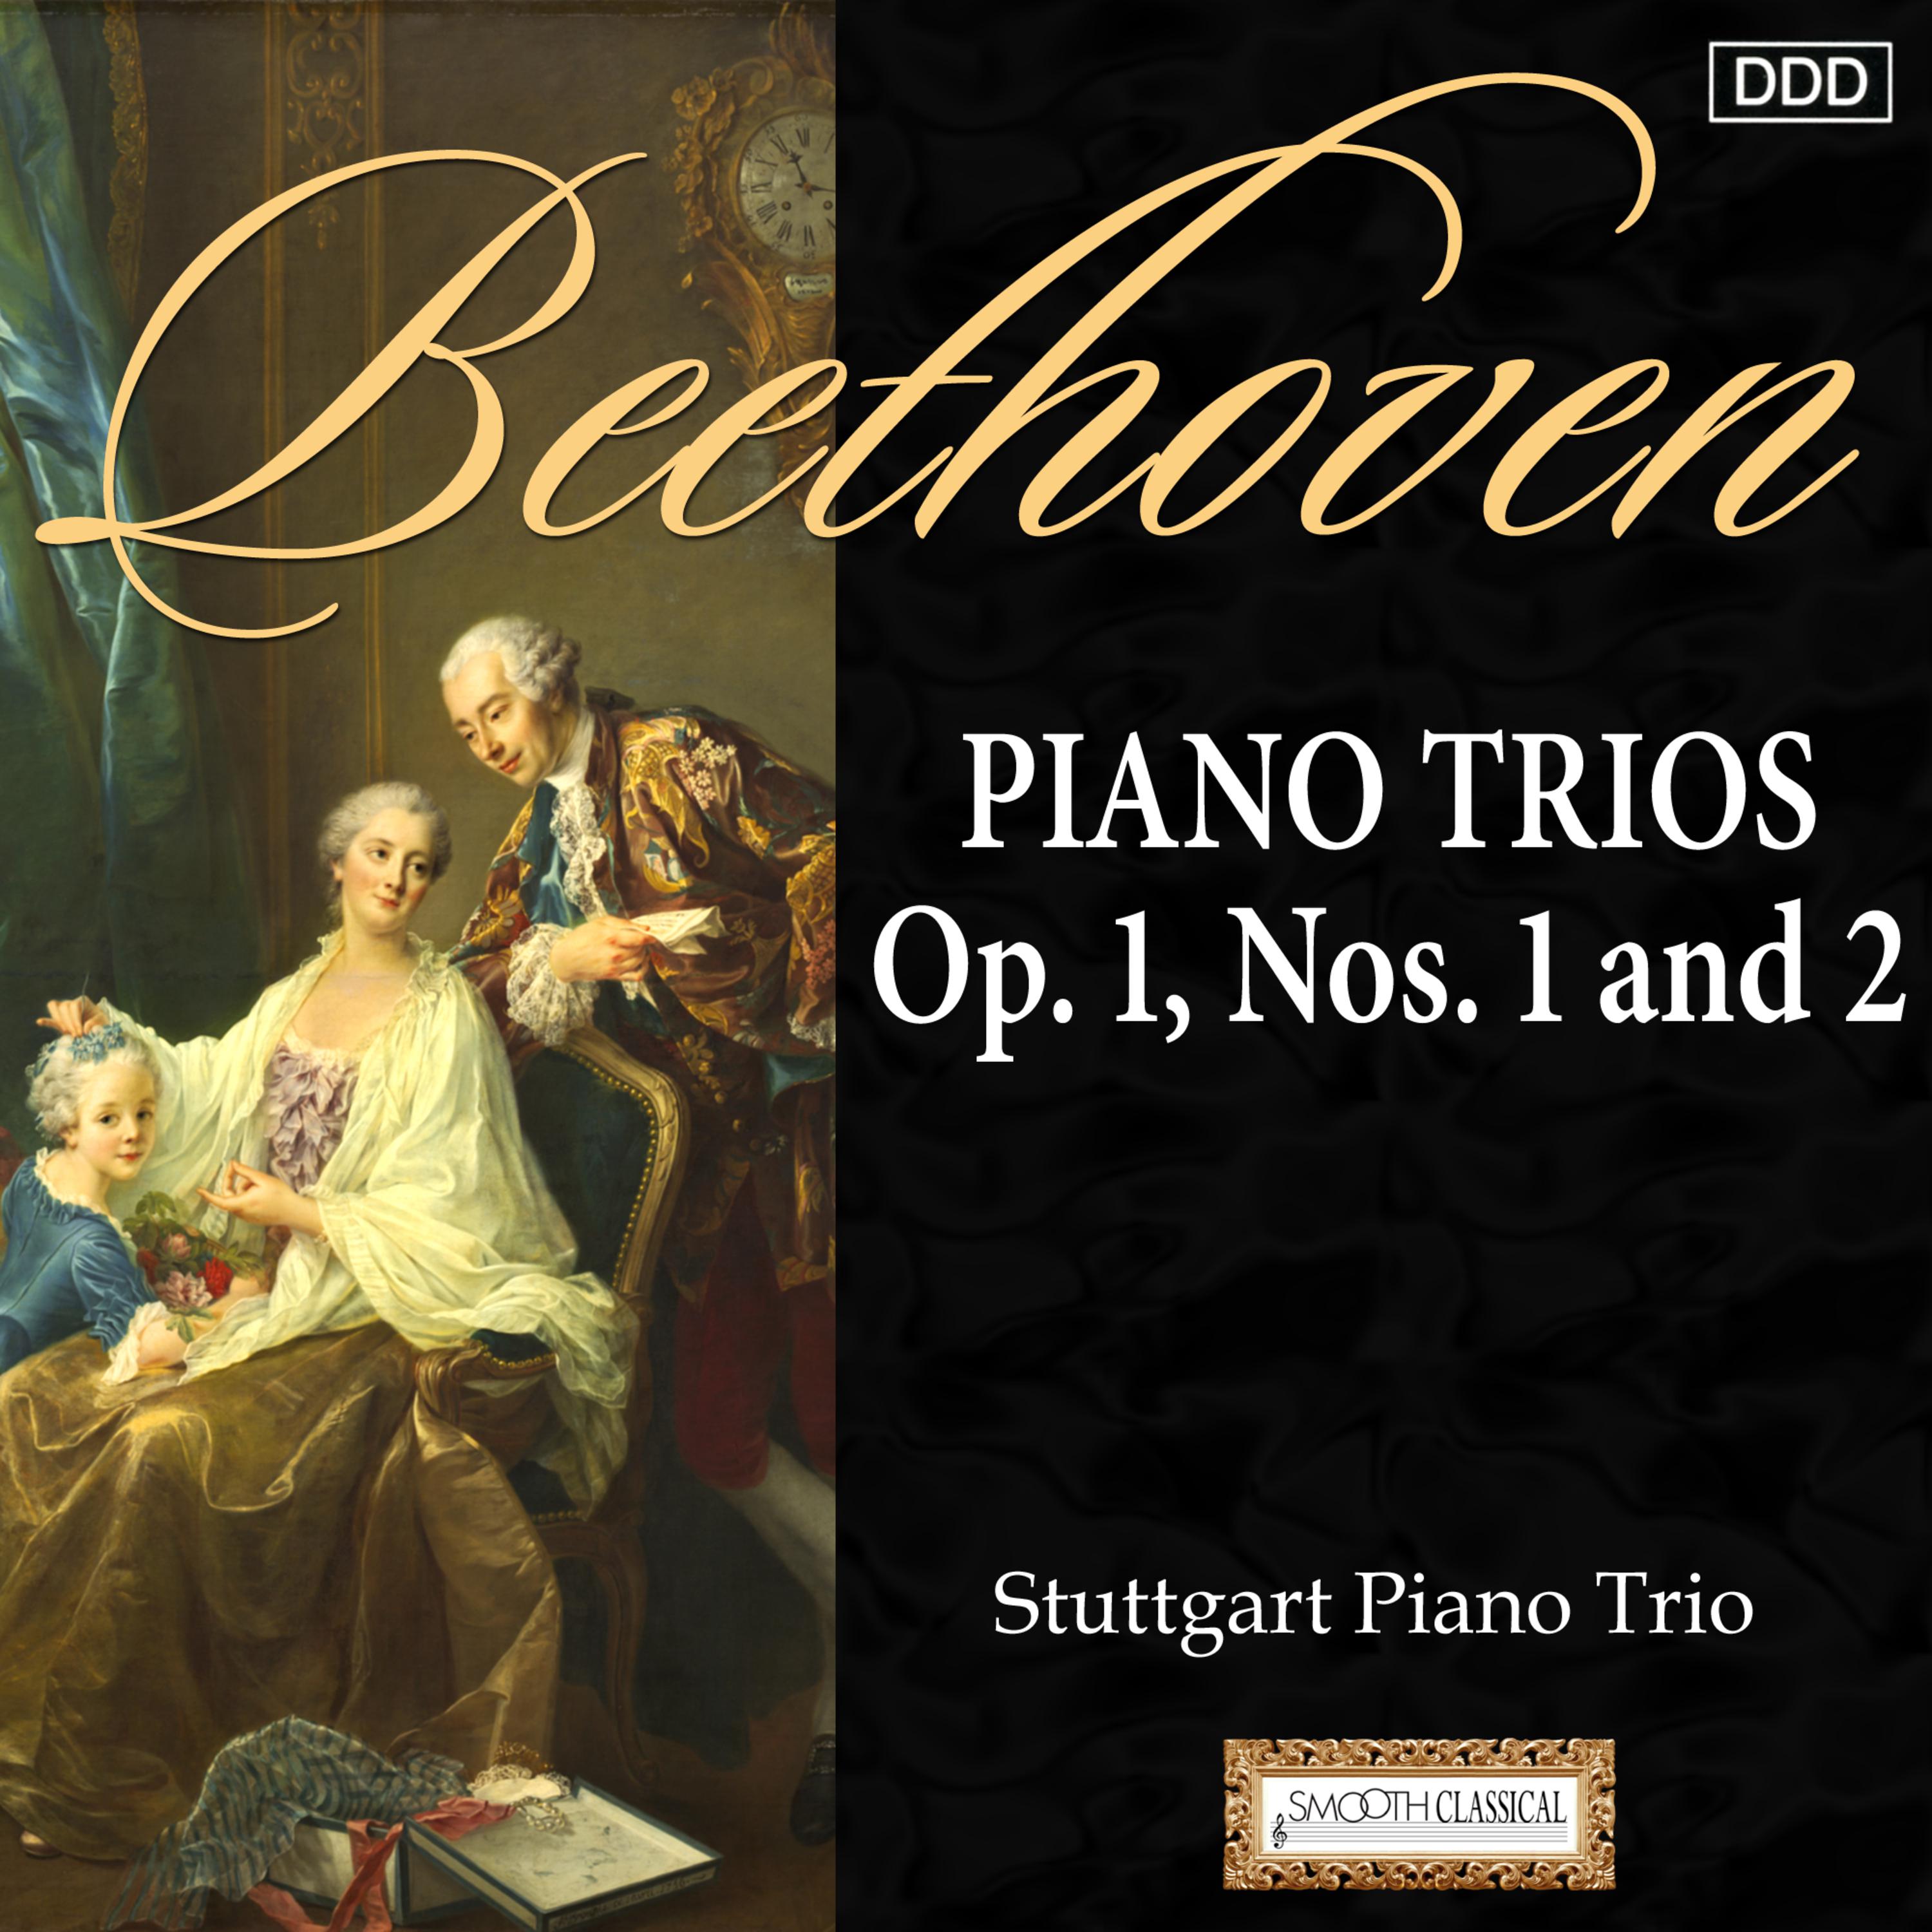 Piano Trio No. 1 in E-Flat Major, Op. 1 No. 1: I. Allegro